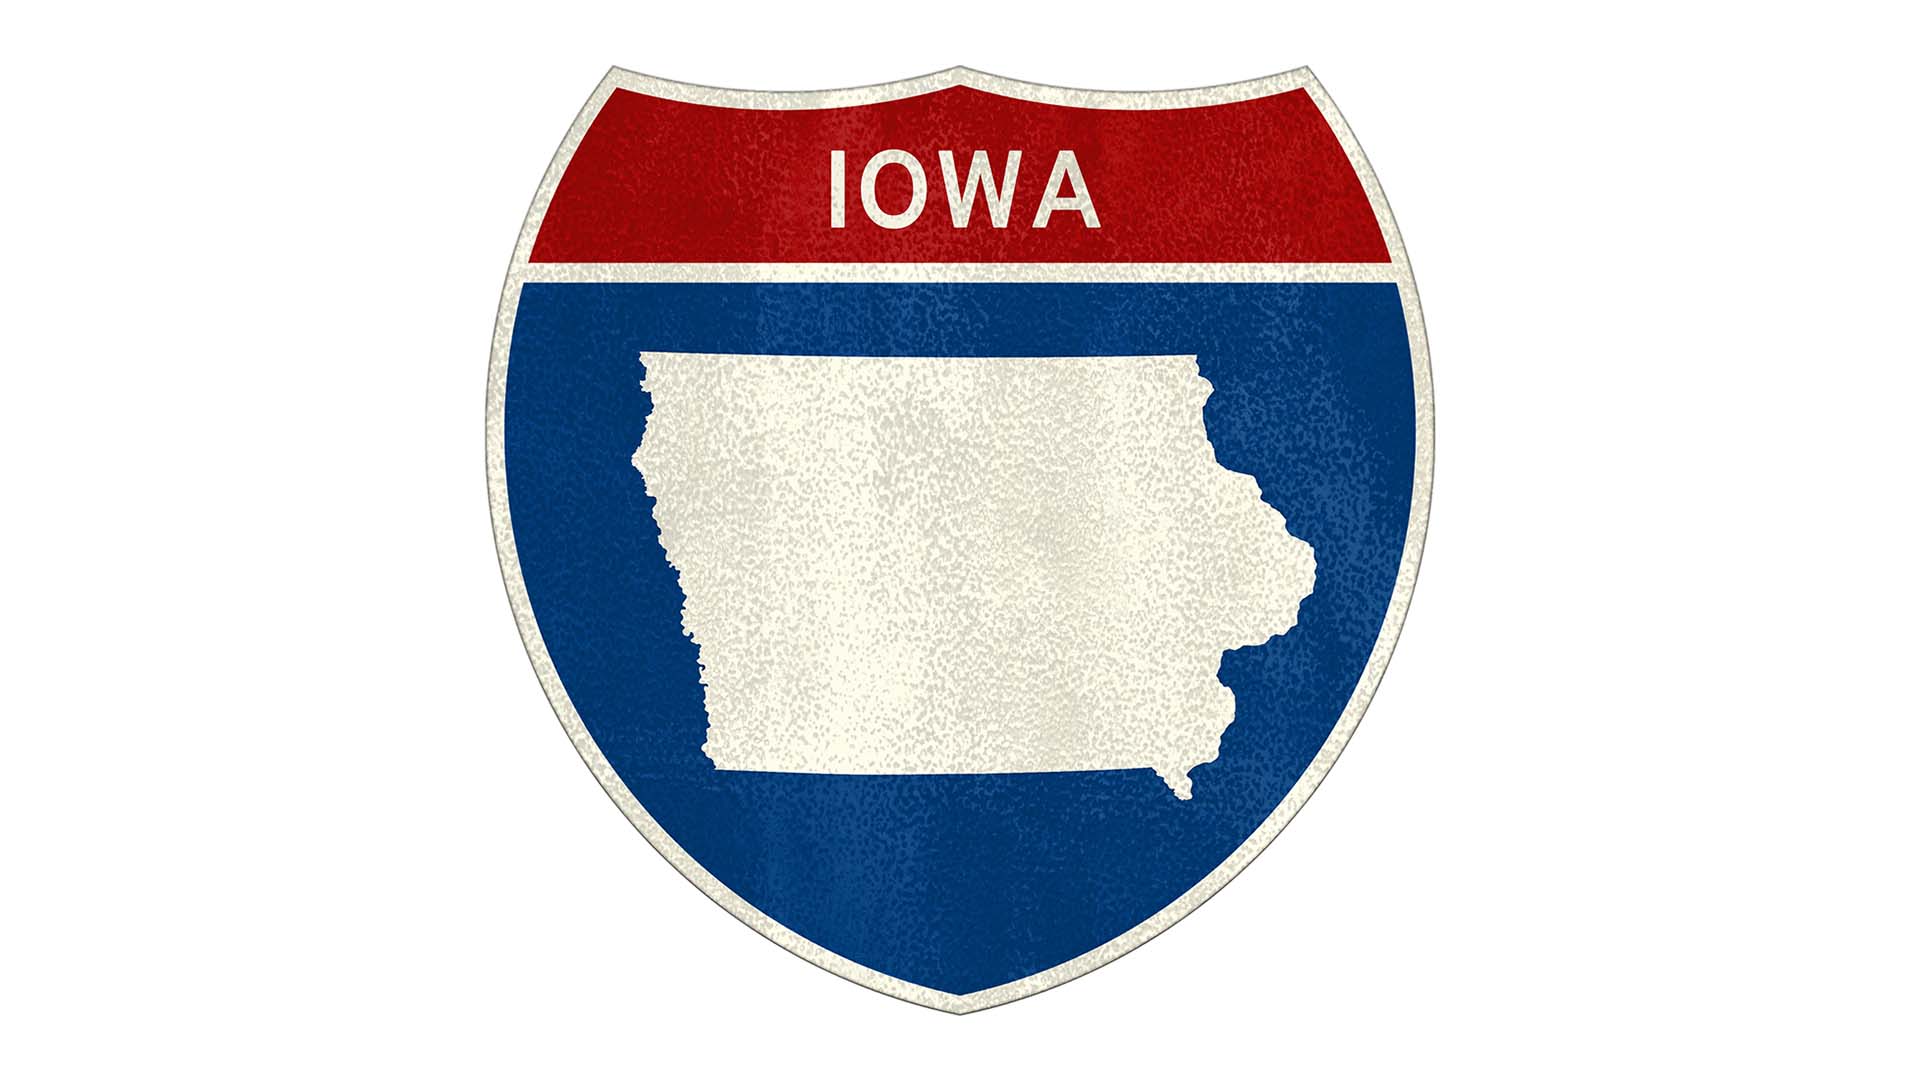 Iowa state roadside sign